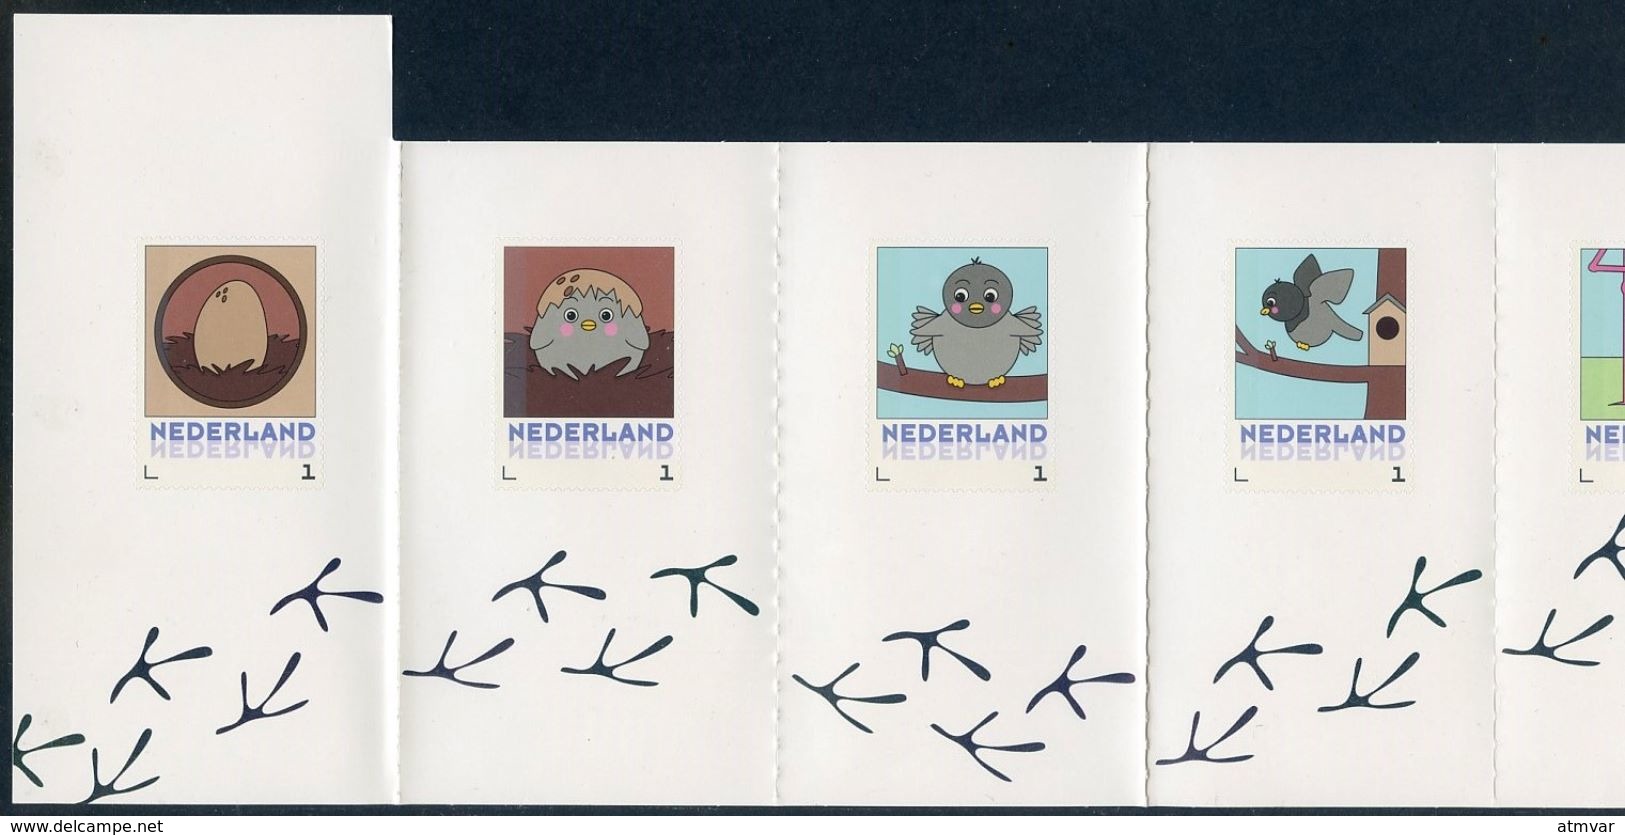 THE NETHERLANDS (2016) - De Postduif - The Carrier Pigeon - Royal Joh. Enschedé - Booklet With 10 Stamps - Timbres Personnalisés